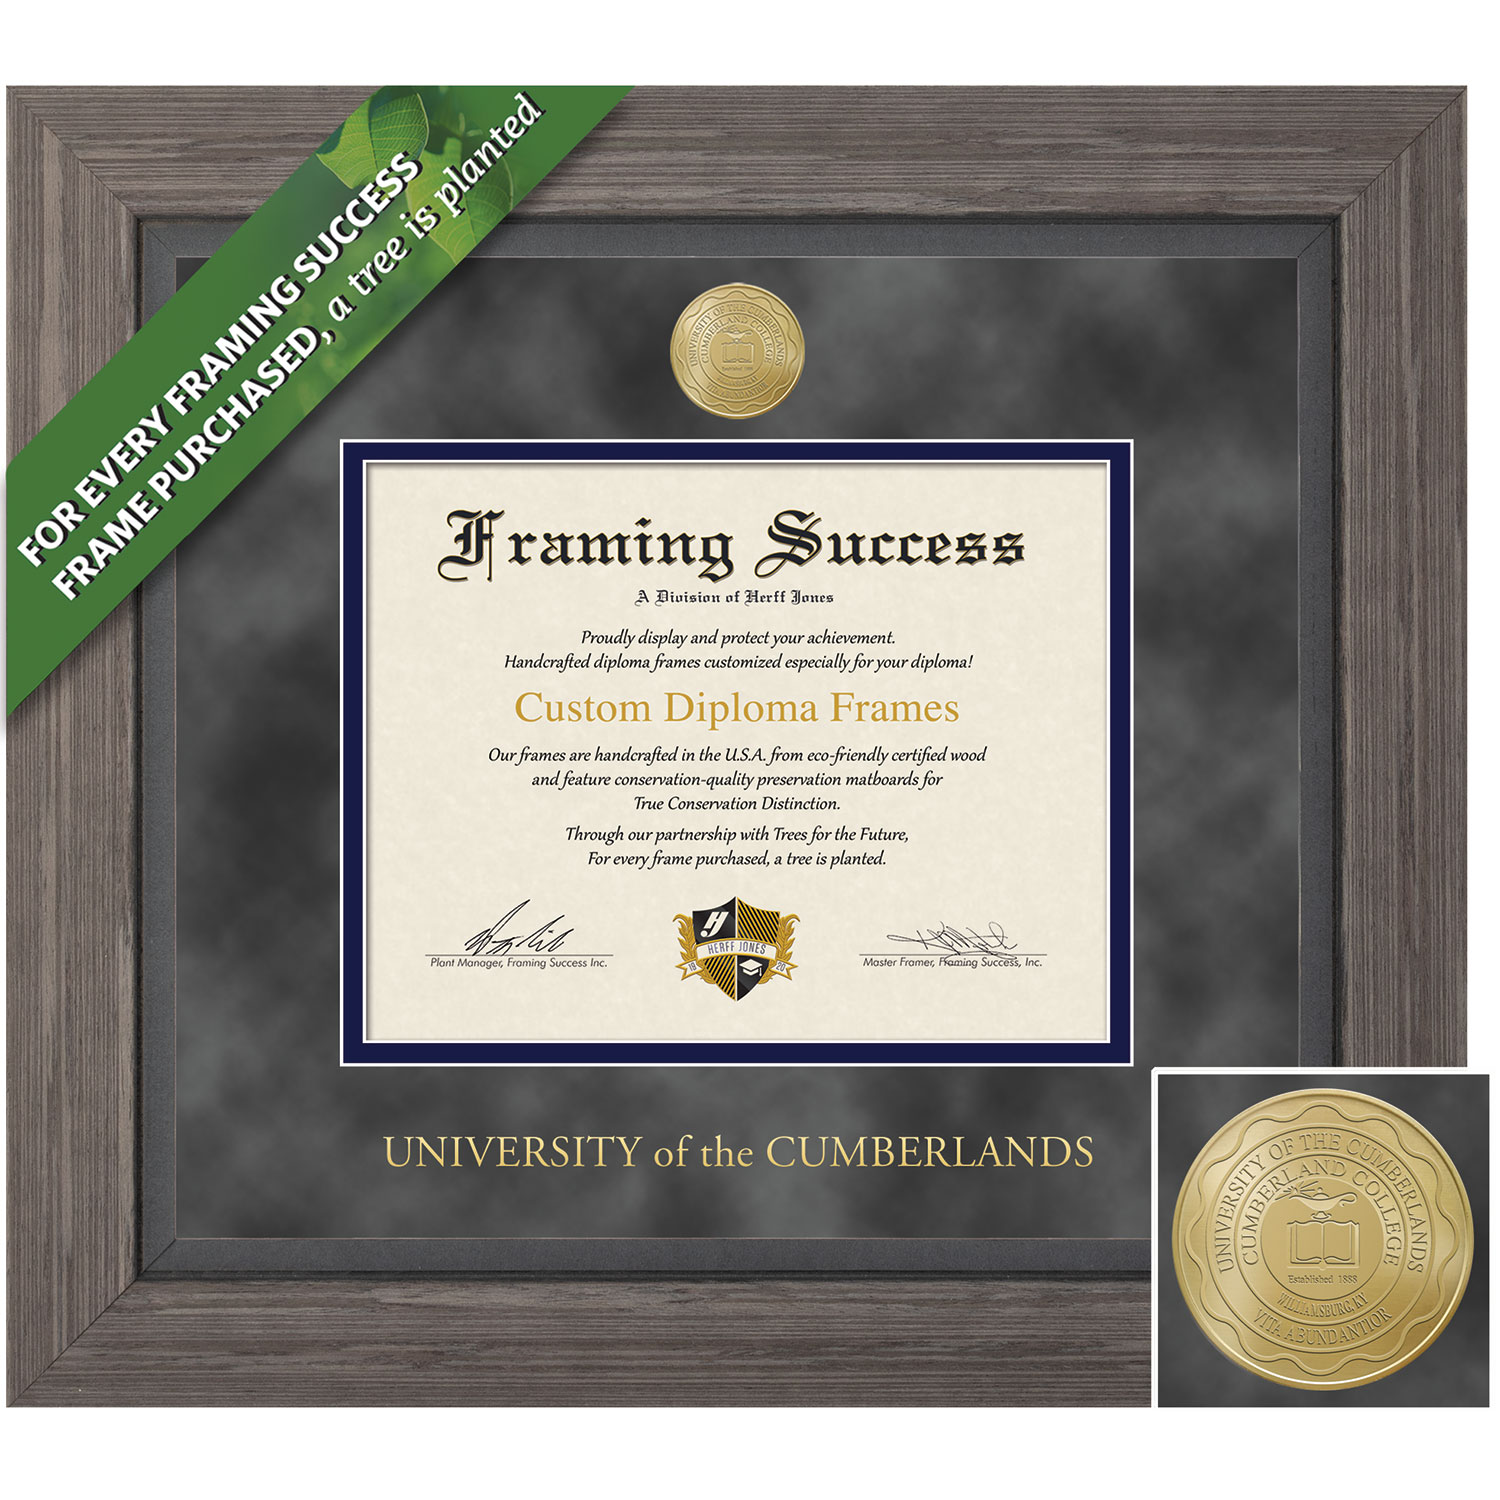 Framing Success 8.5 x 11 Greystone Gold Medallion Associates, Bachelors Diploma Frame